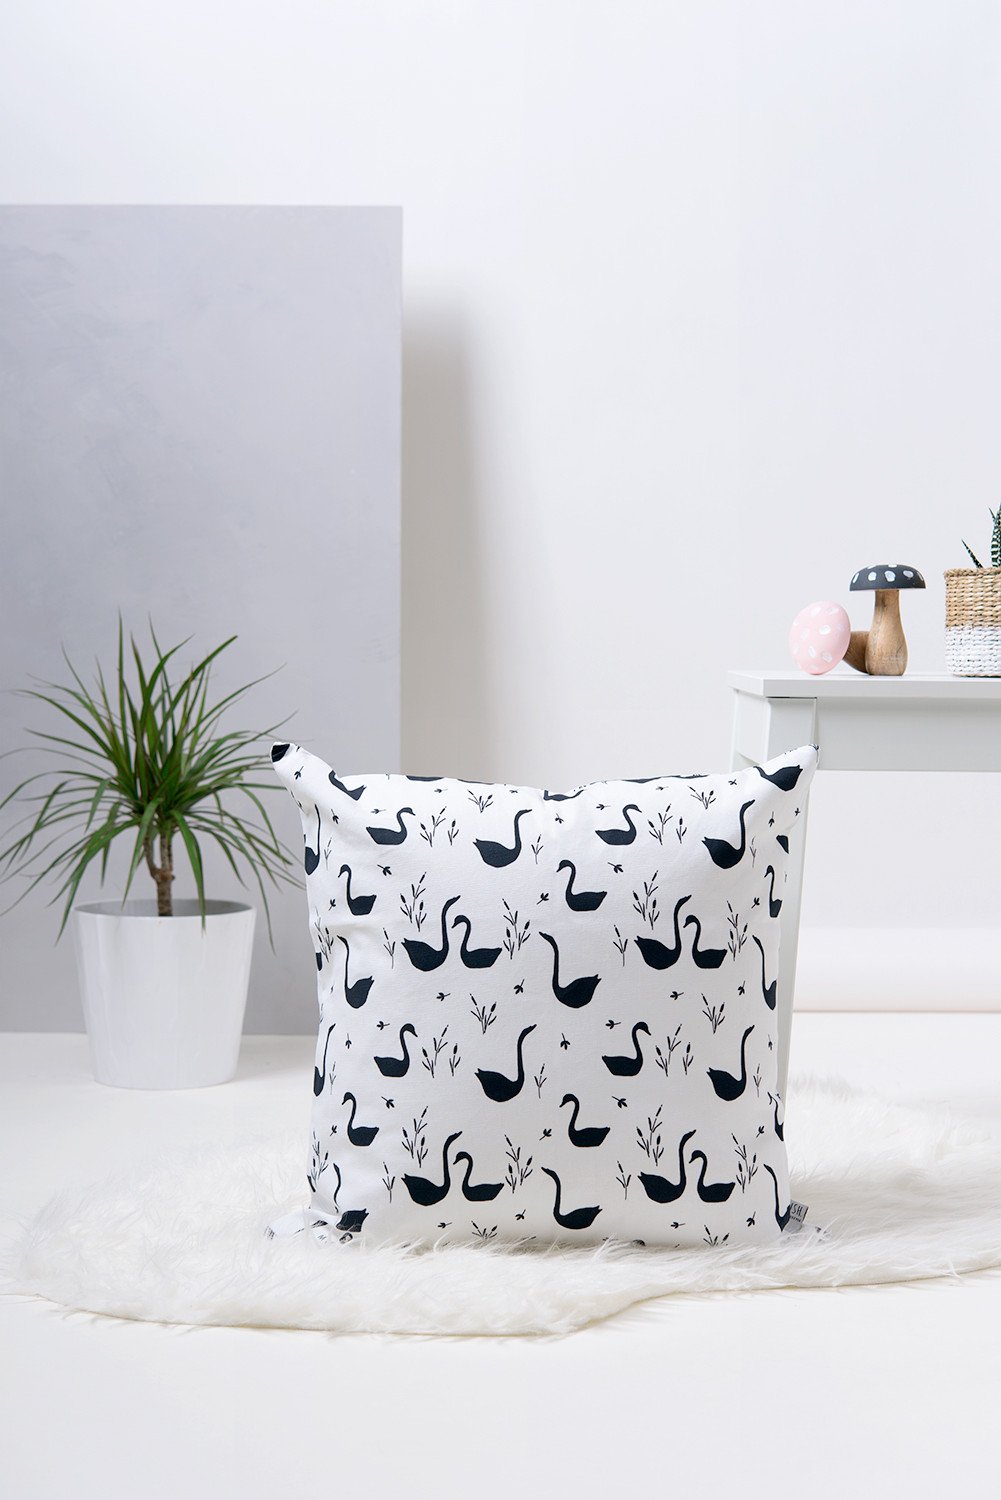 Decorative Pillow - Swans Pattern